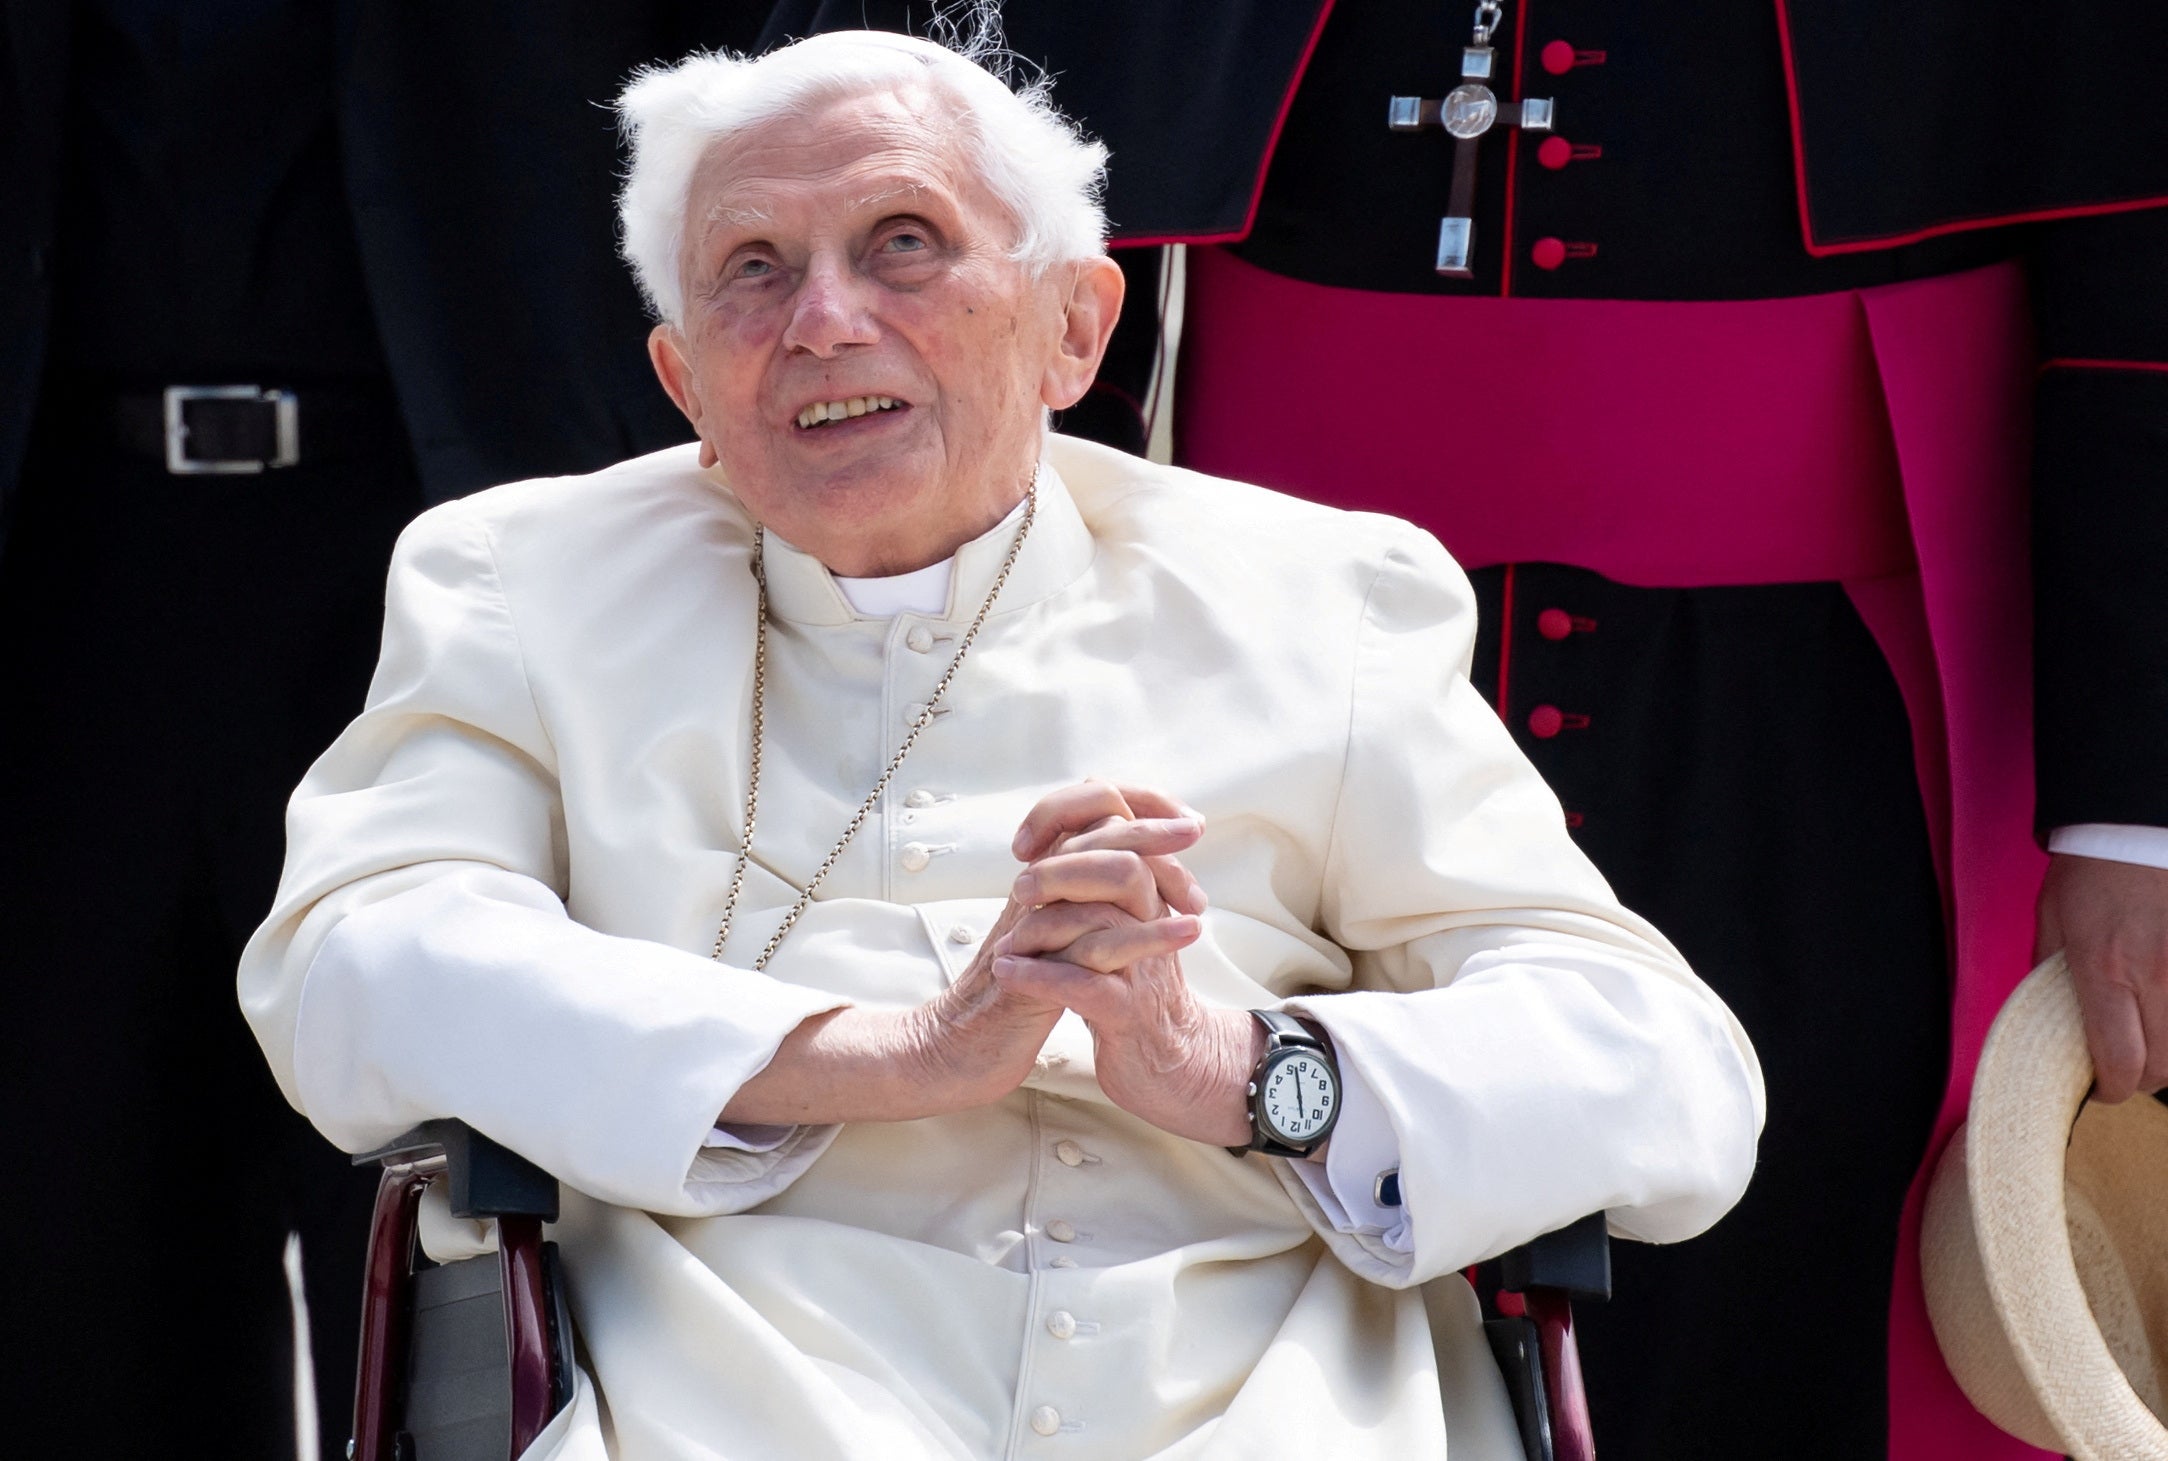 Pope Benedict had fallen ill in recent days